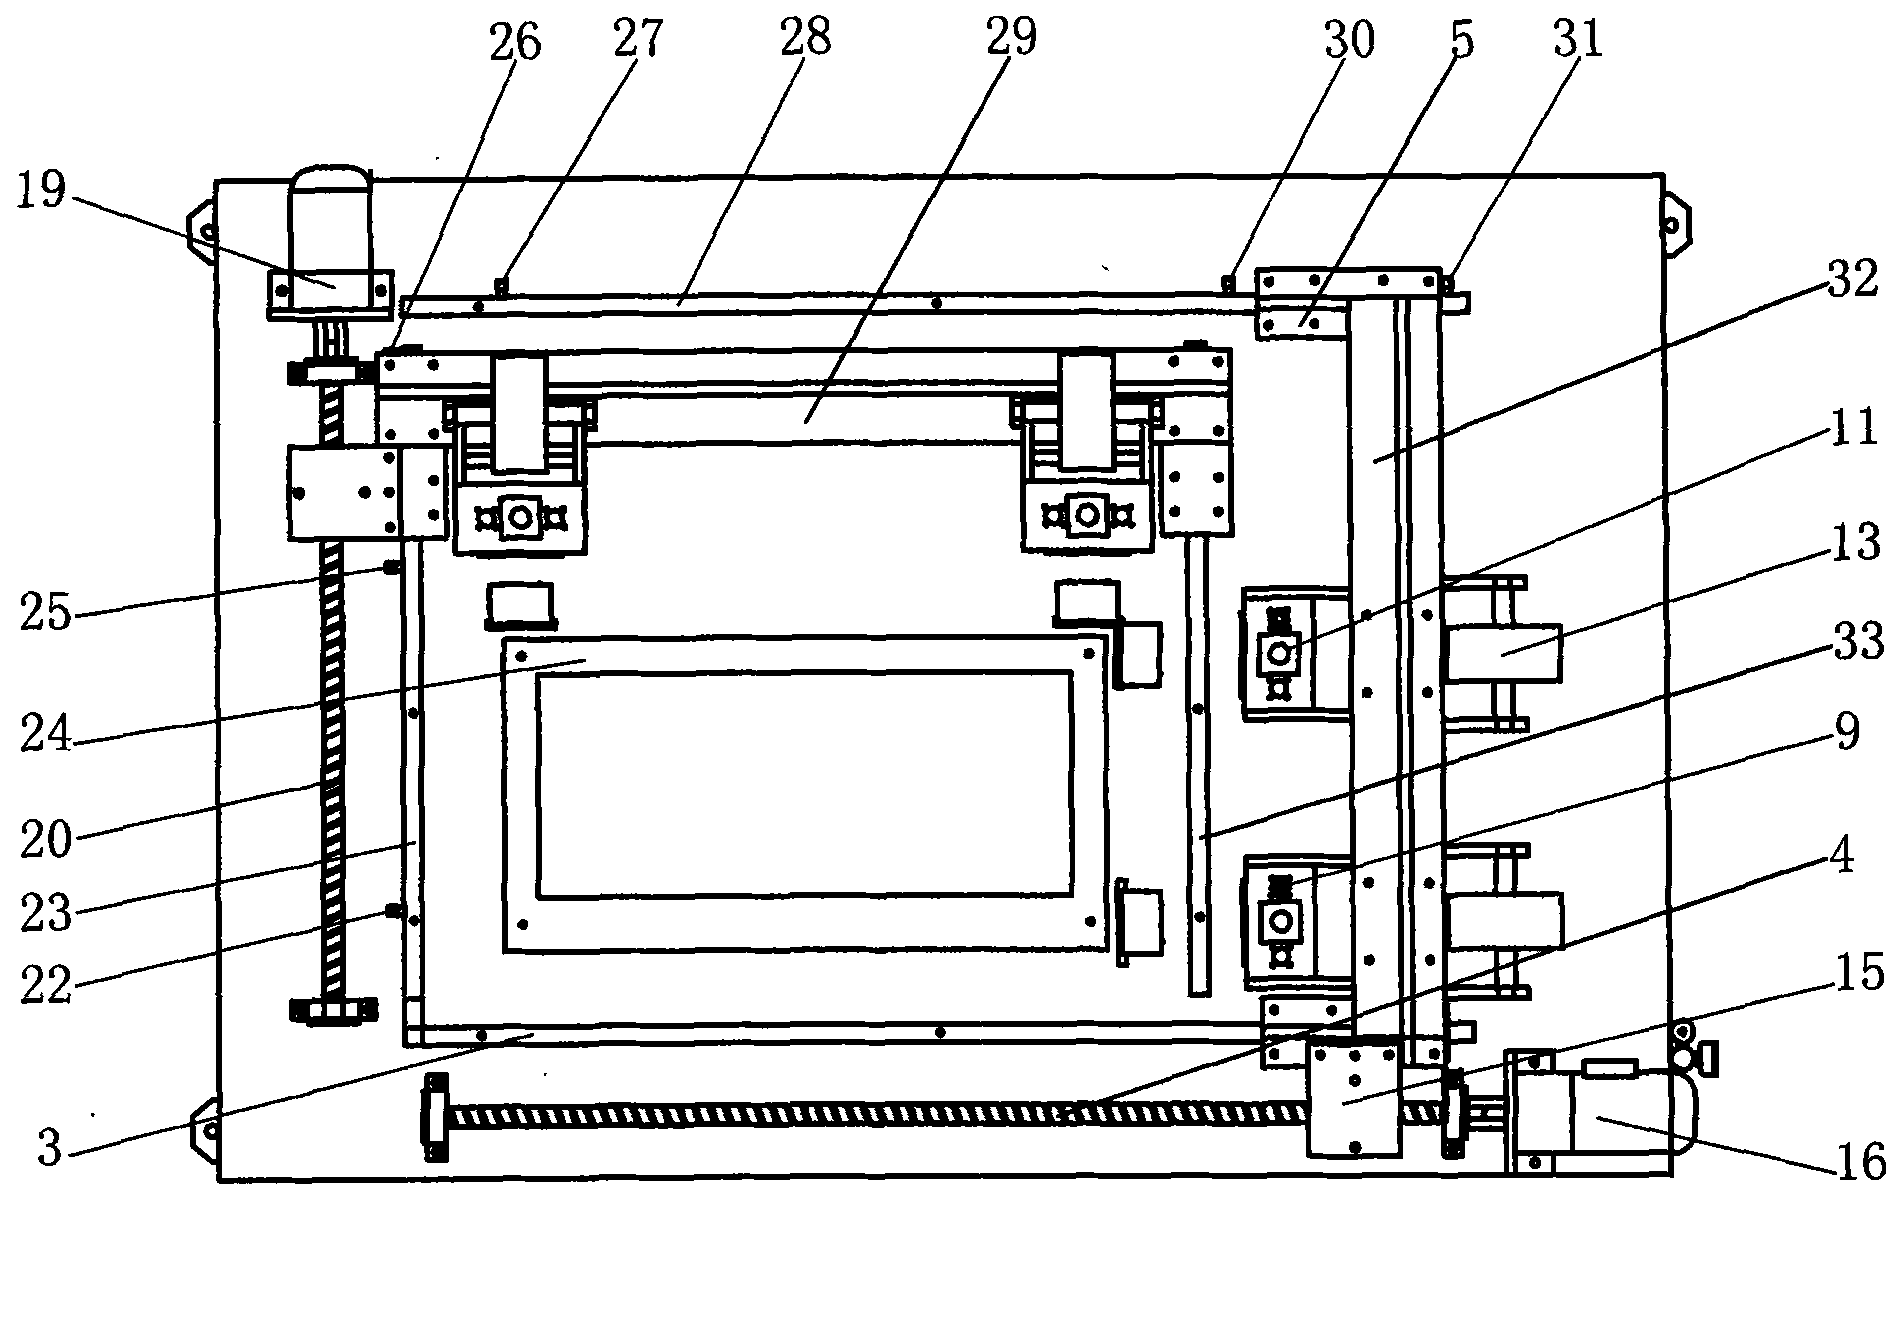 Four-side film laminator